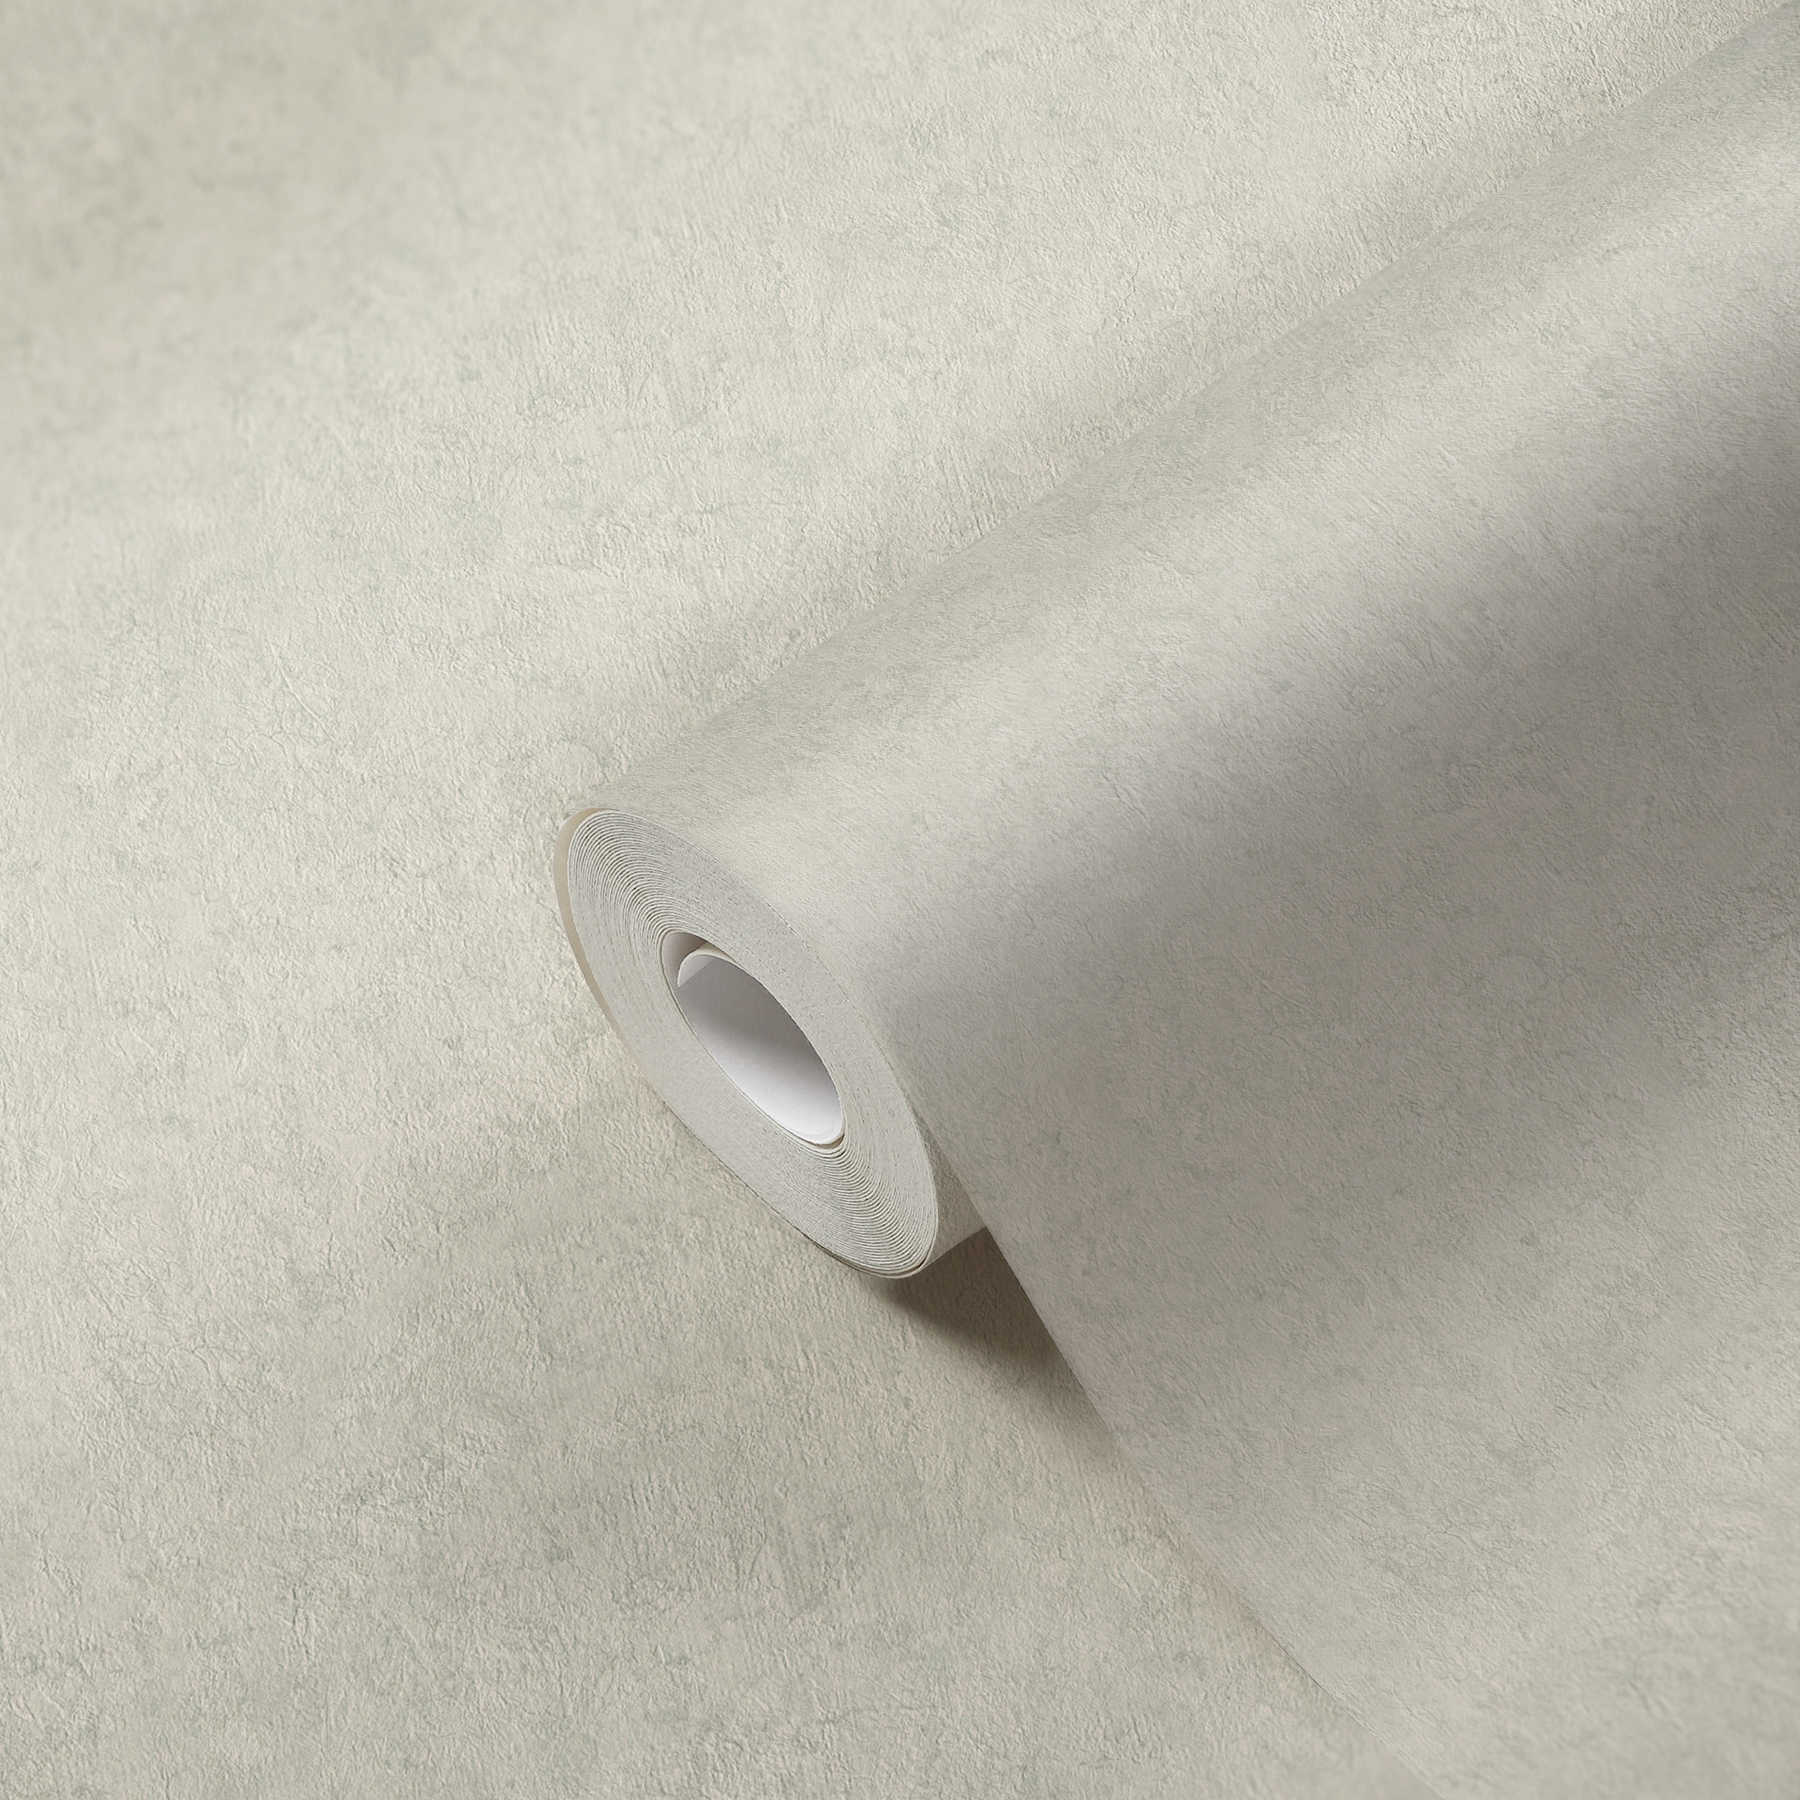             Papel pintado tejido-no tejido liso neutro papel pintado unidad seda mate - gris
        